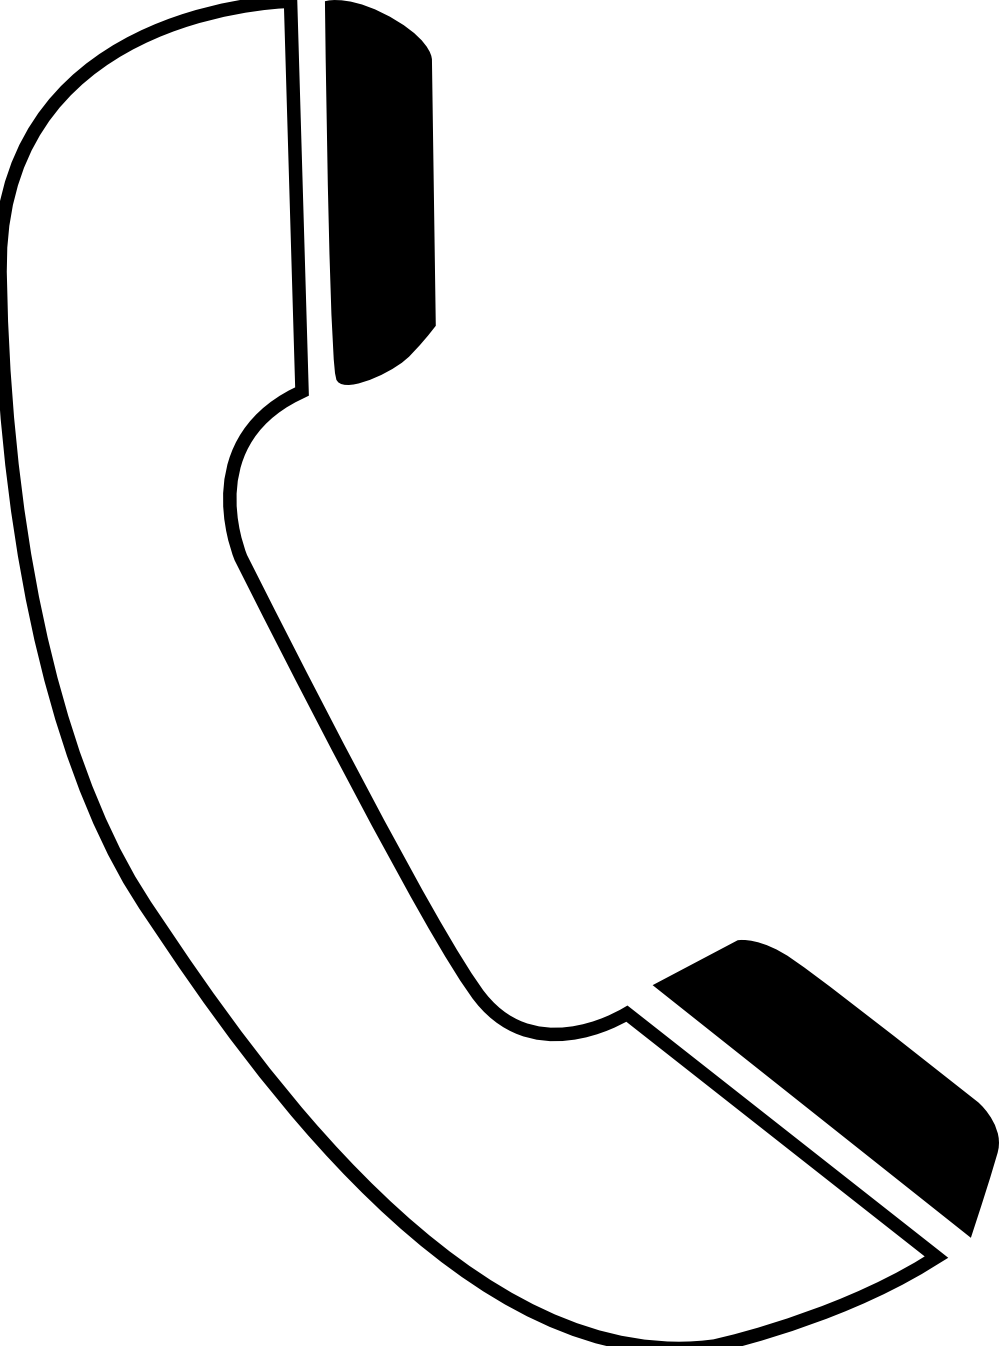 Telephone phone clip art at vector free 2 image